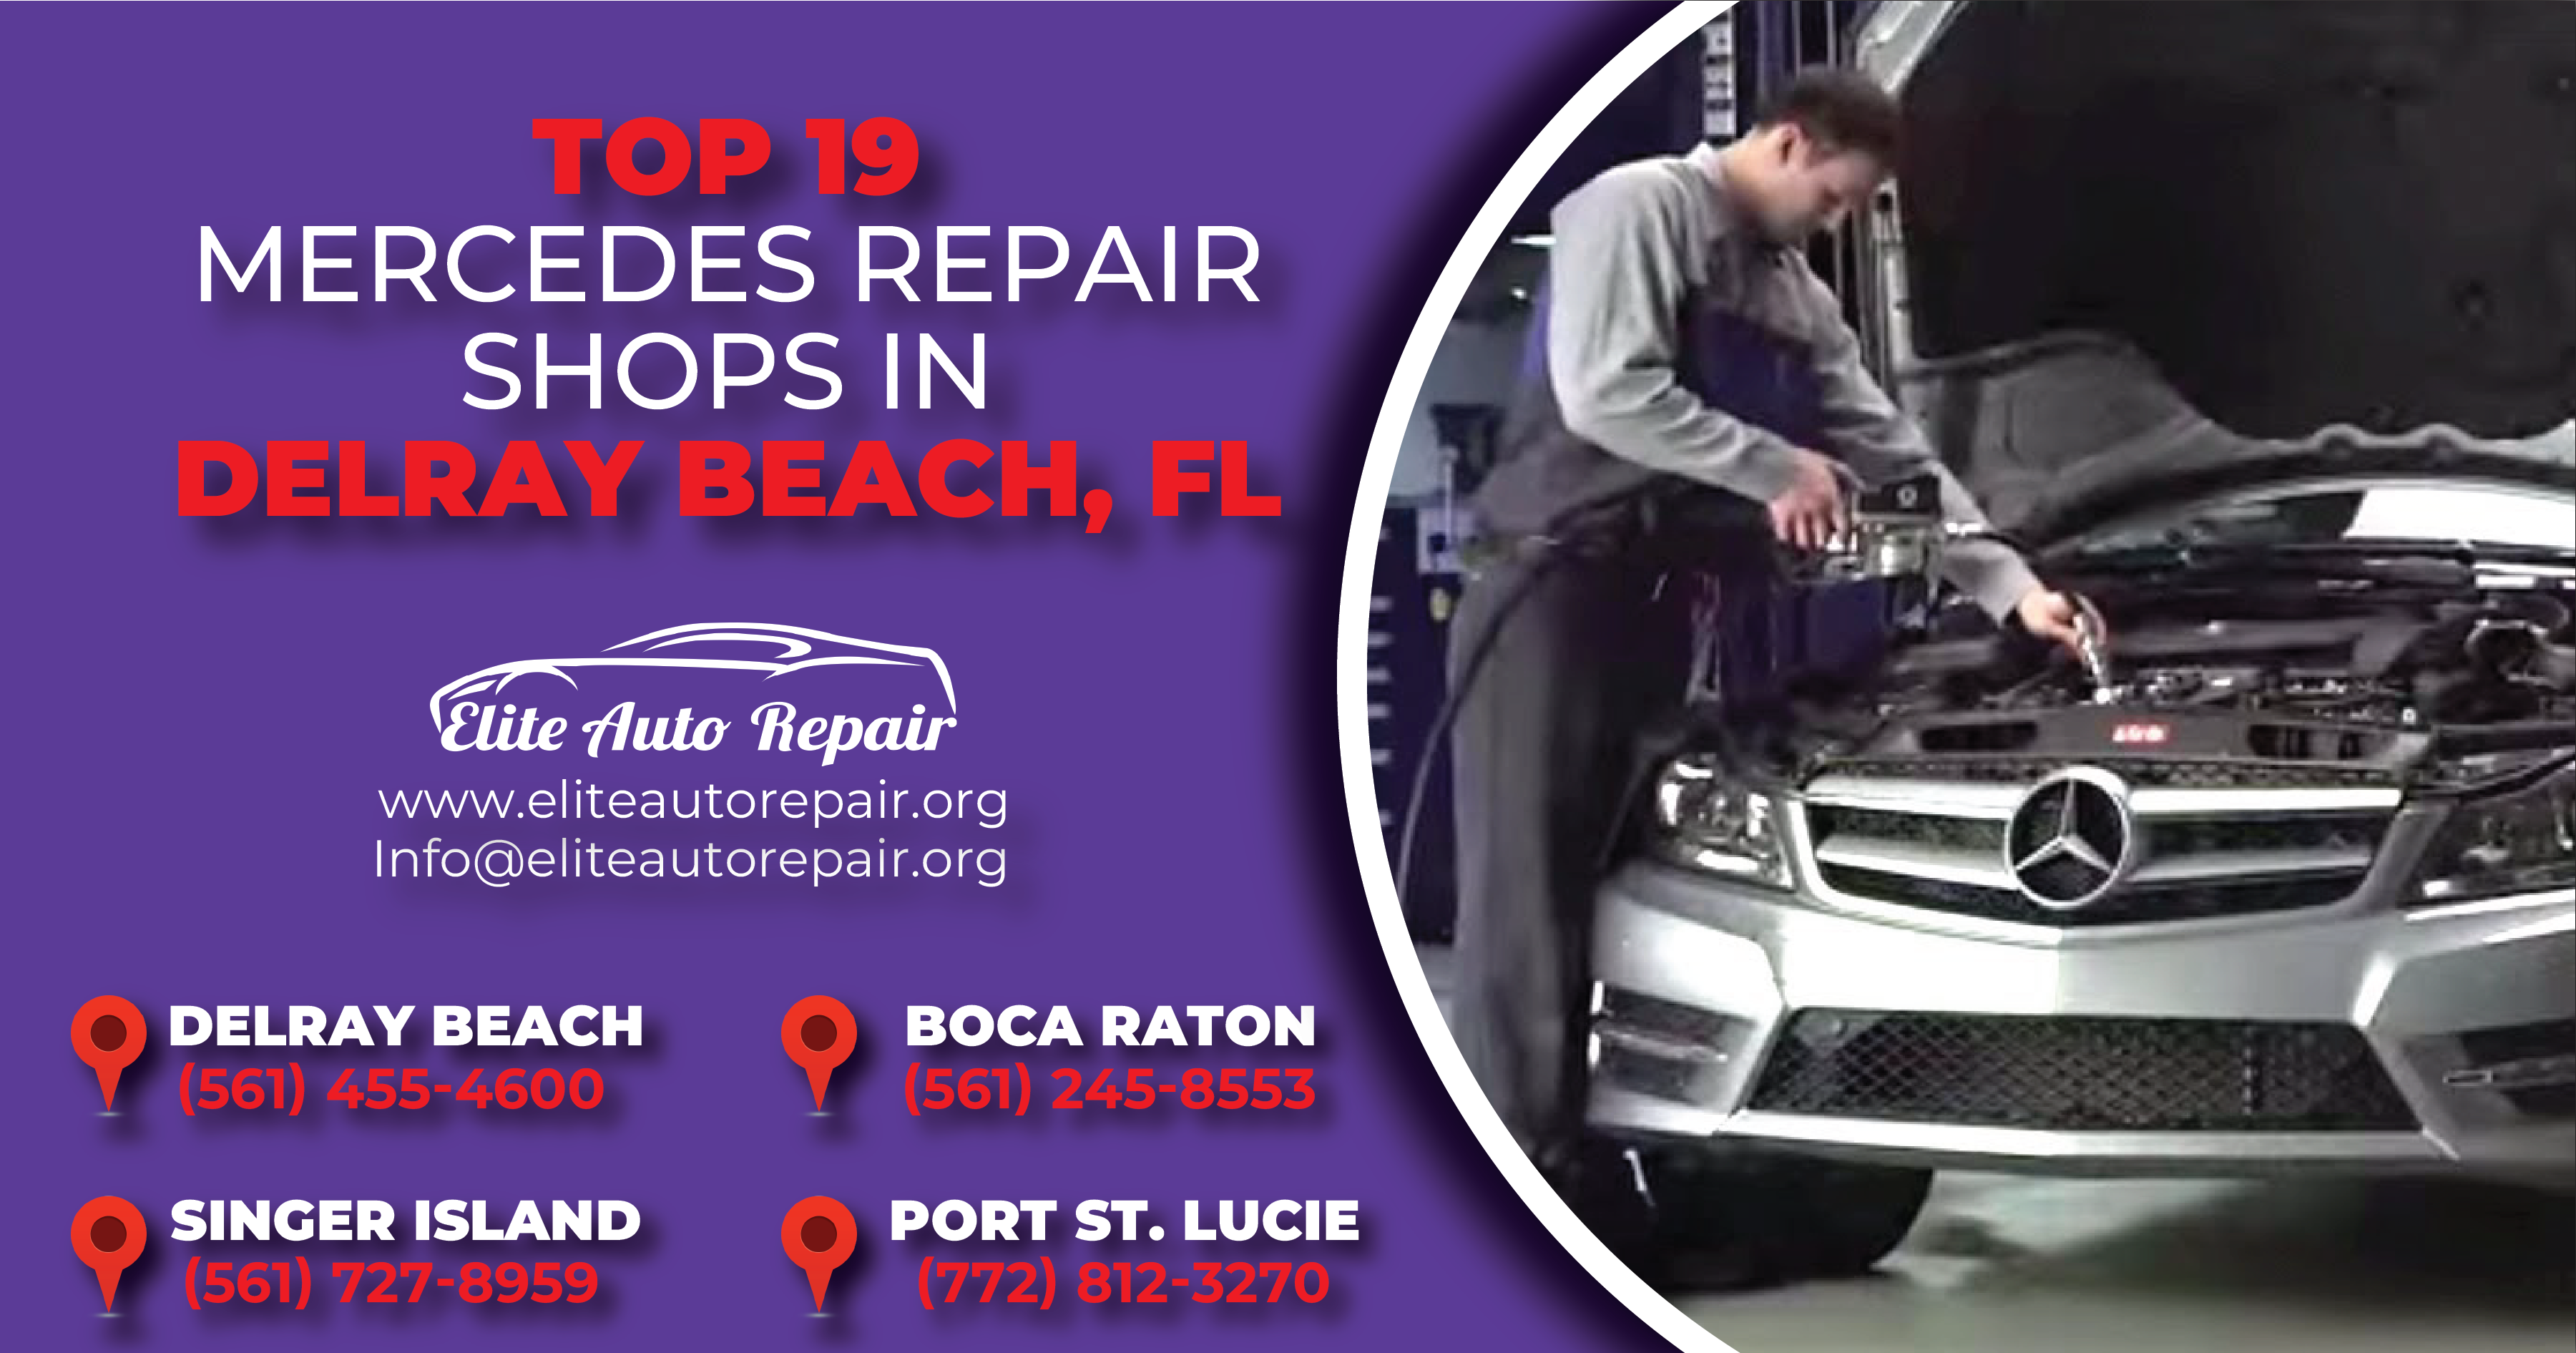 Top 19 Mercedes Repair Shops in Delray Beach, FL